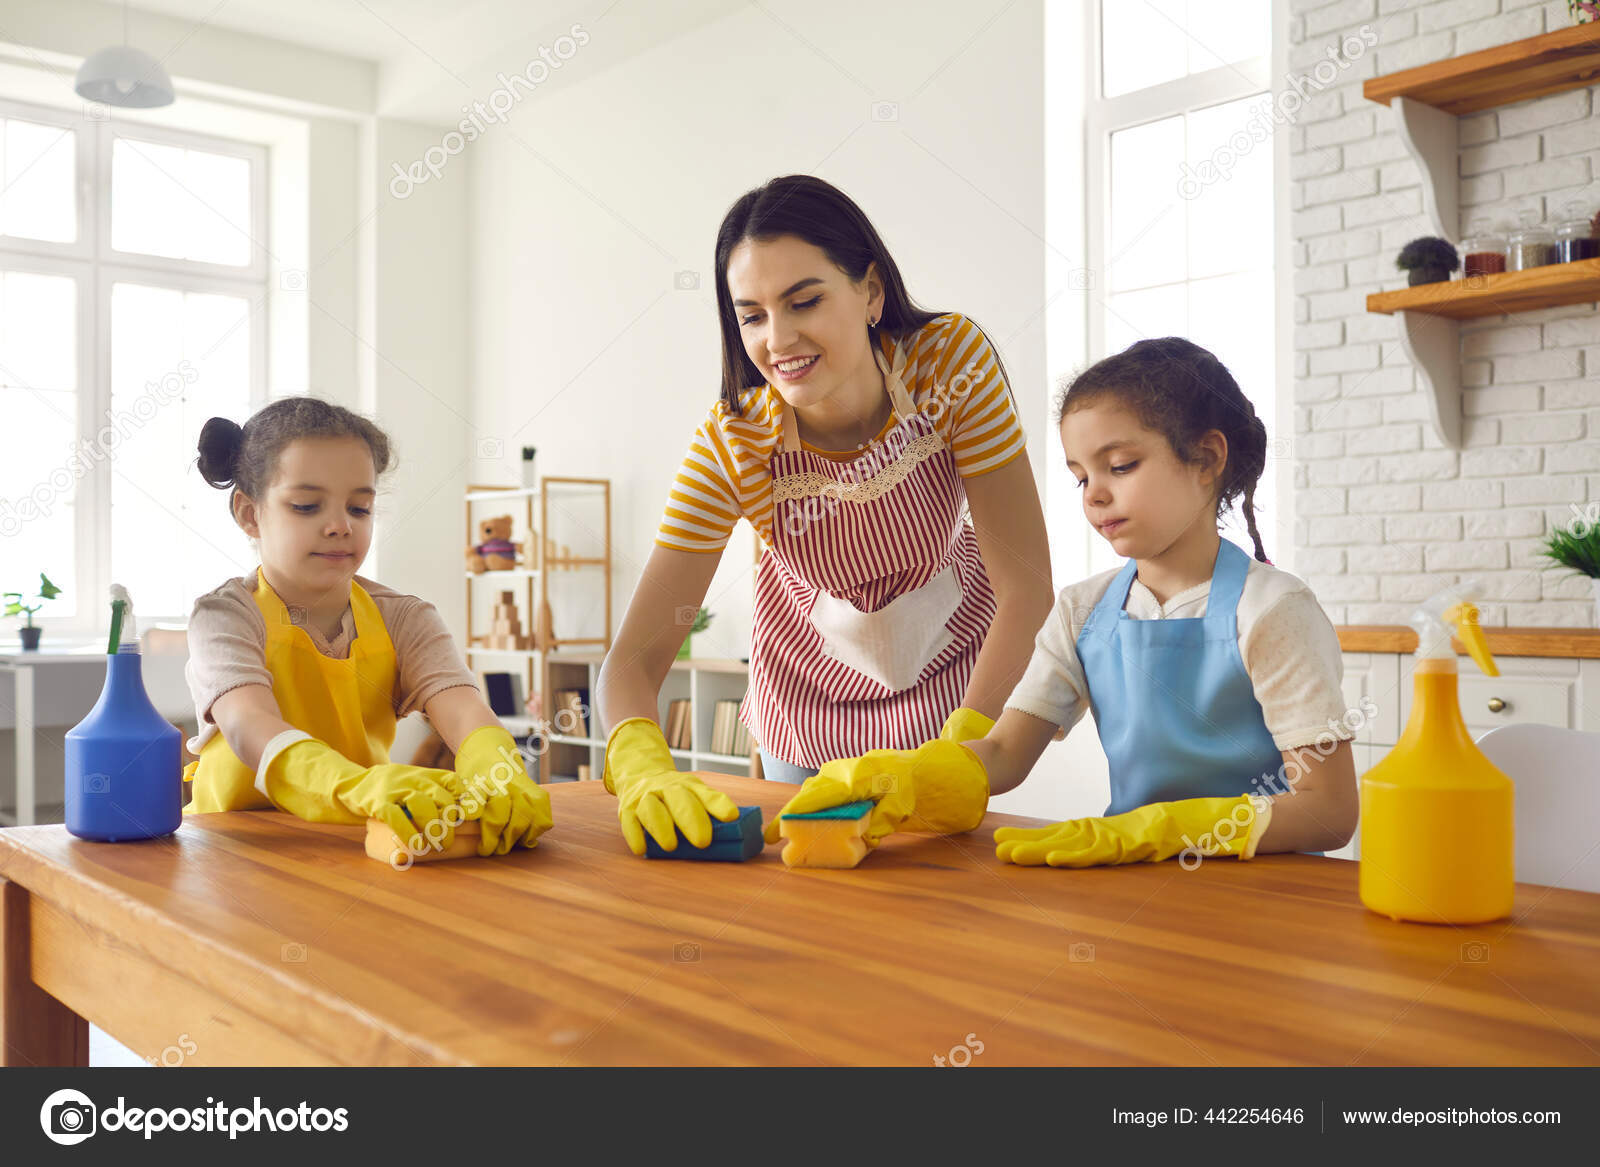 https://st2.depositphotos.com/8214686/44225/i/1600/depositphotos_442254646-stock-photo-happy-little-daughters-helping-their.jpg